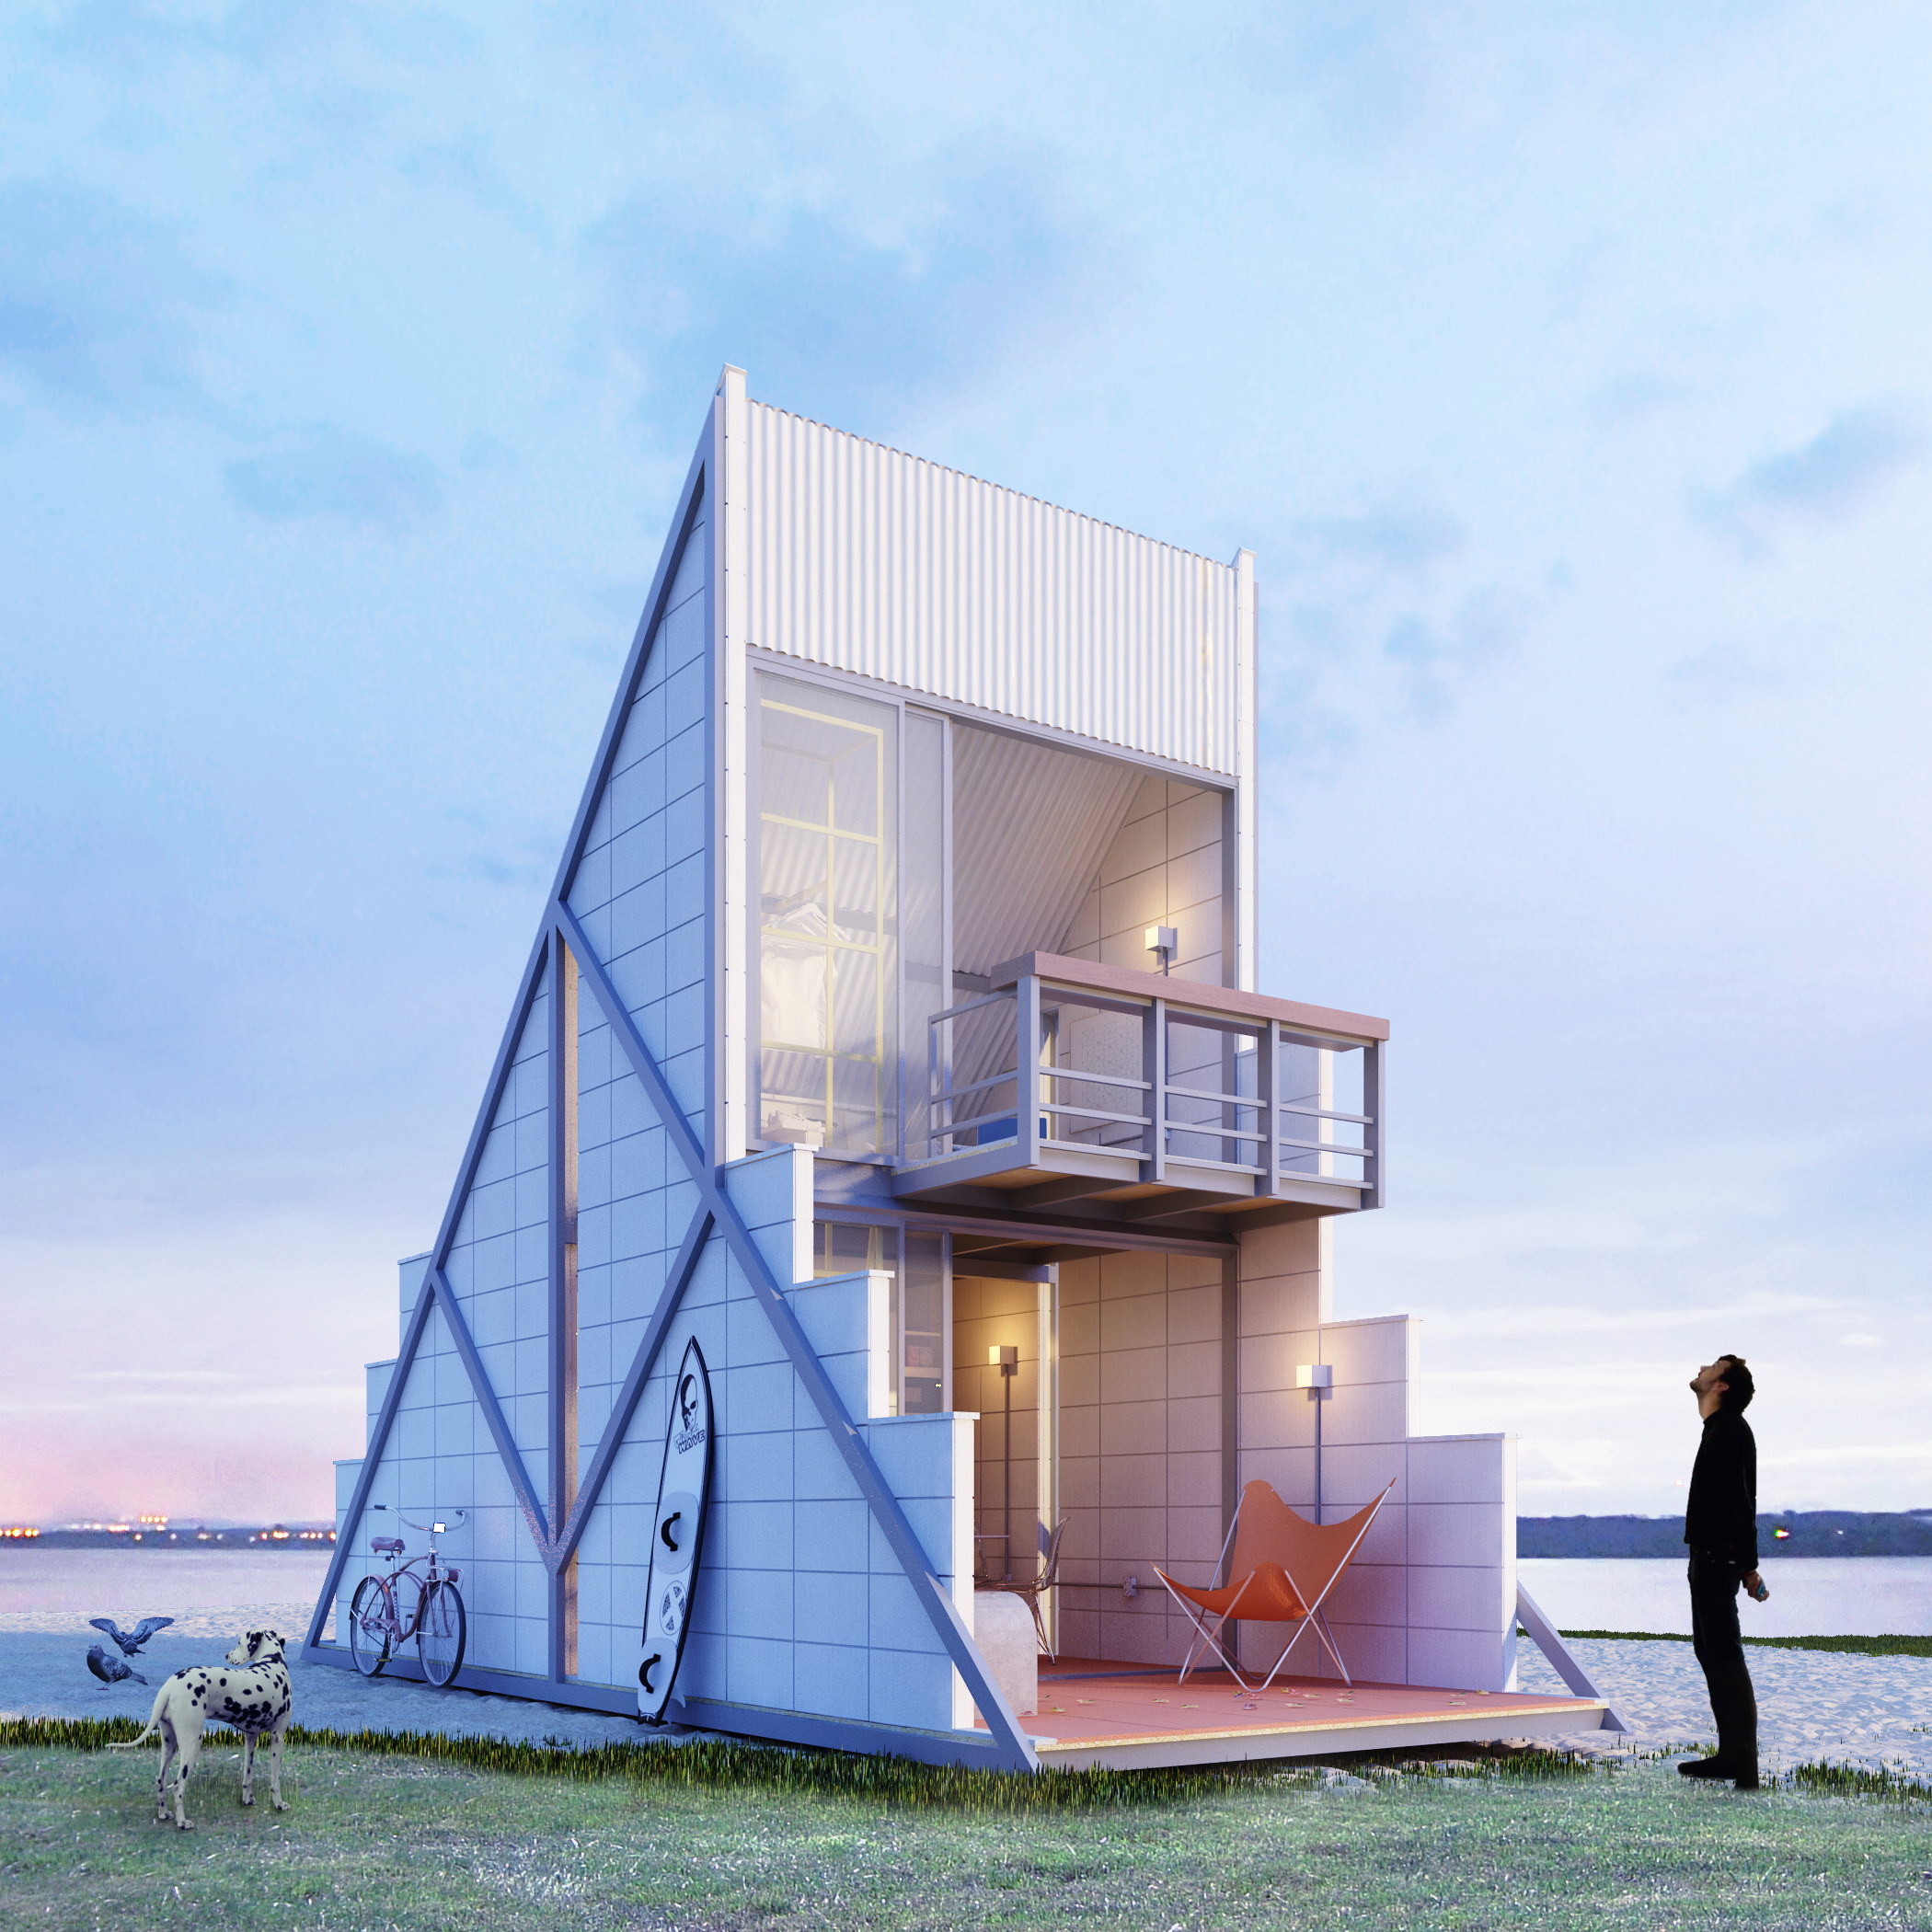 Triangular Micro House by Felipe Campolina